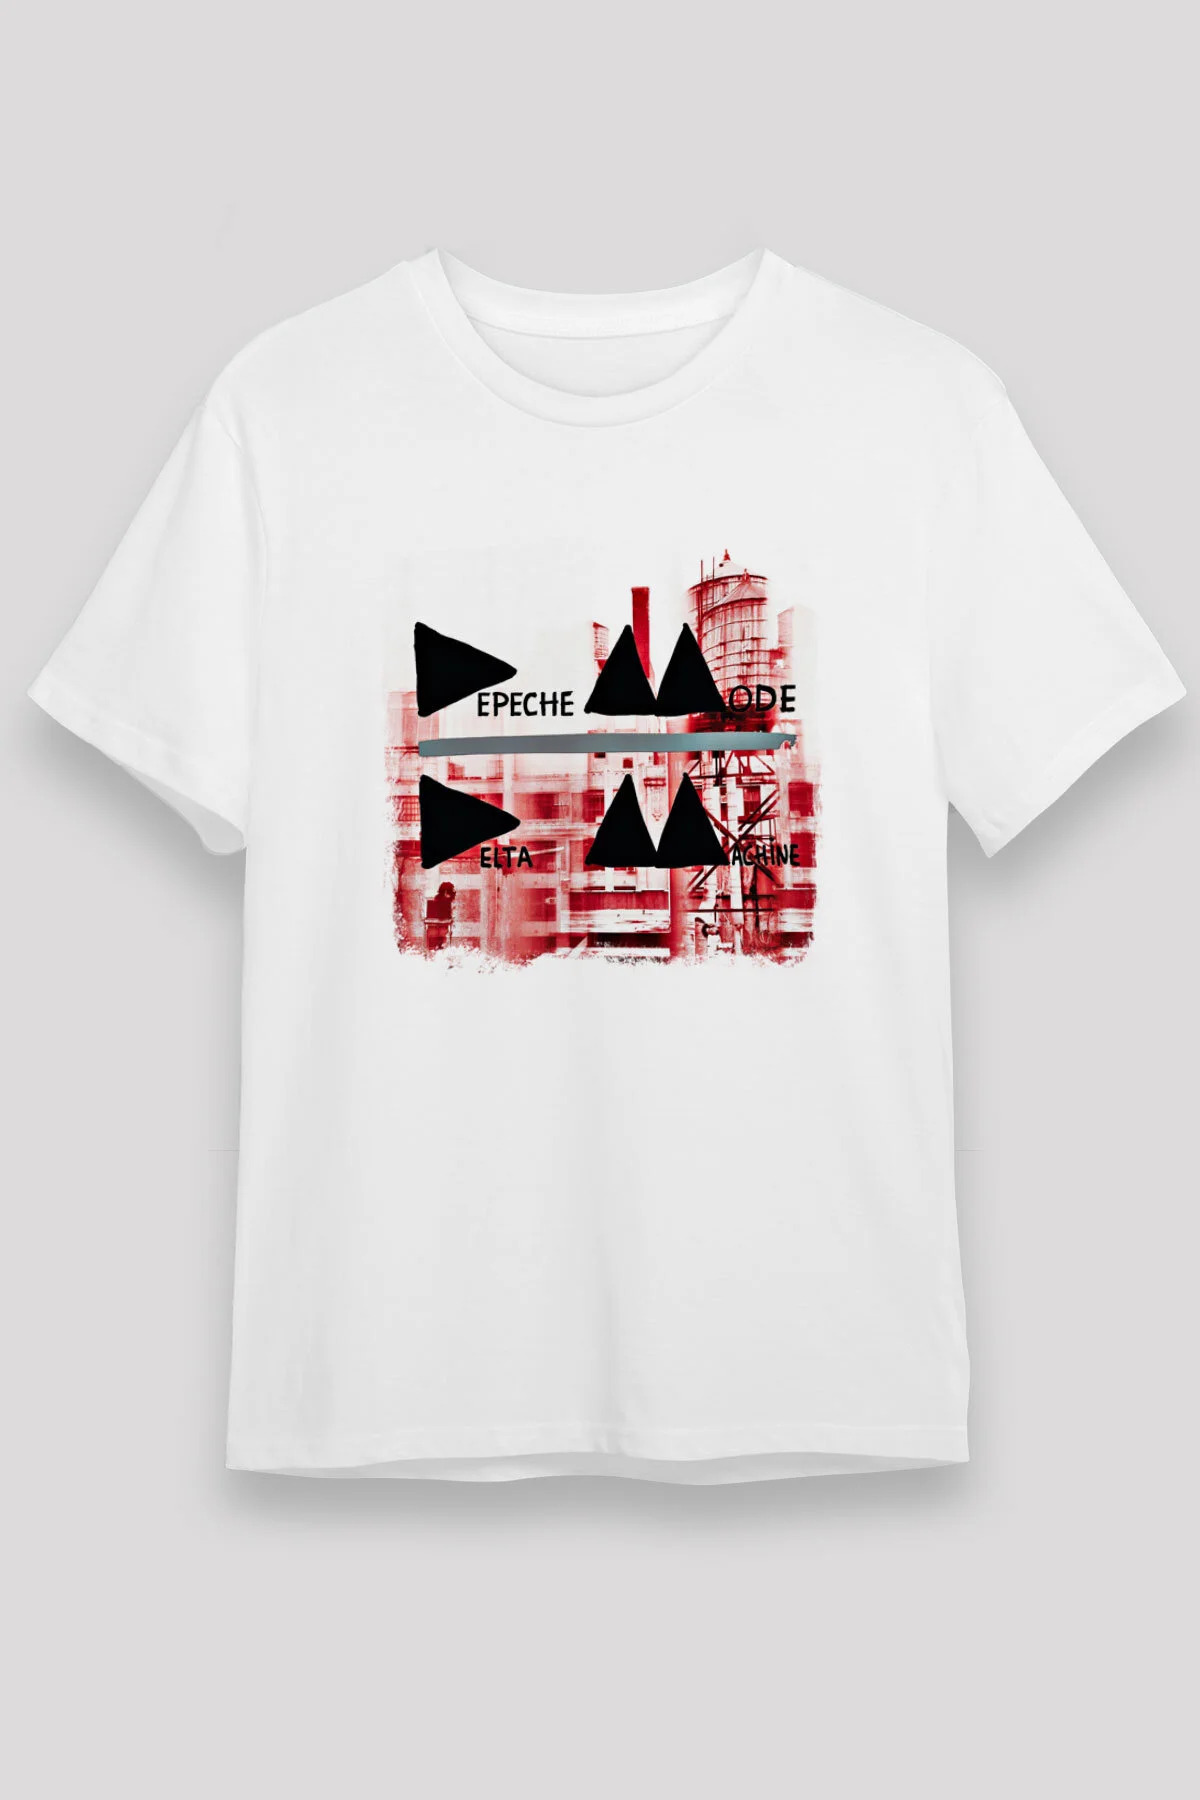 Depeche Mode T shirt , Music Band ,Unisex Tshirt 16/